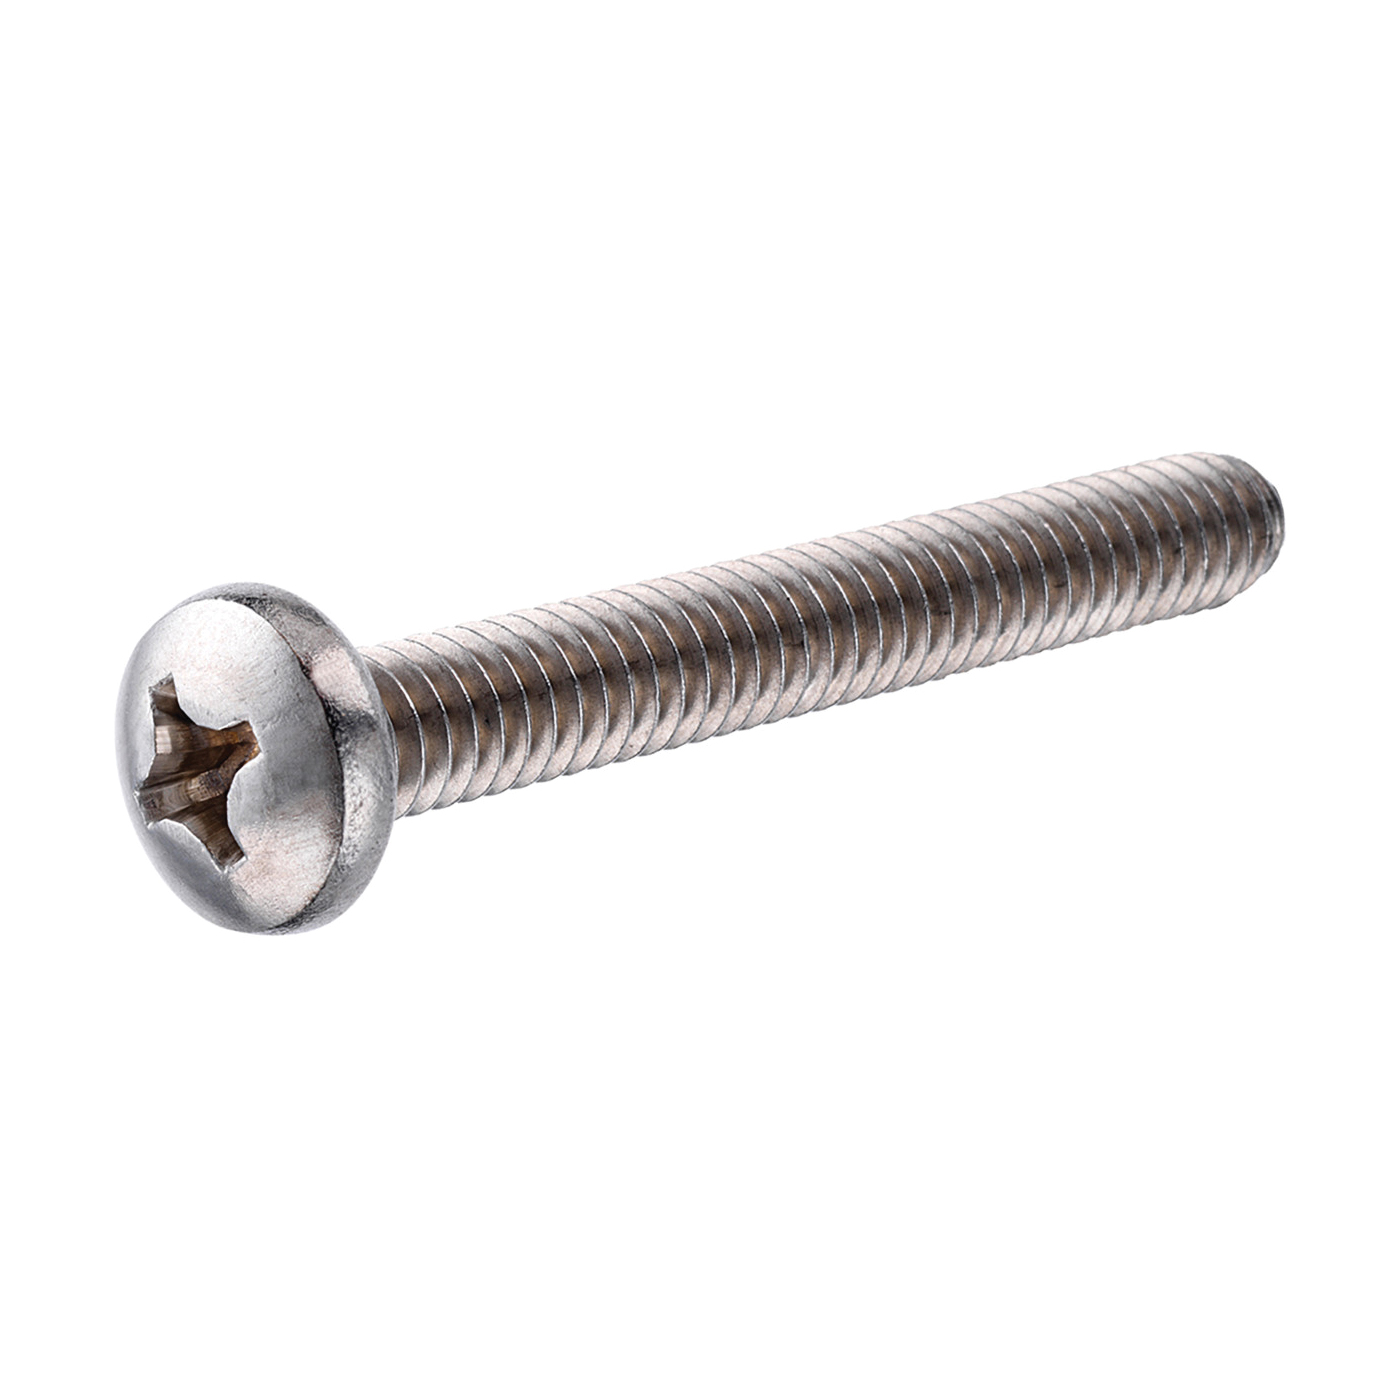 881144 Machine Screw, #4-40 Thread, 1/2 in L, Pan Head, Phillips Drive, Stainless Steel